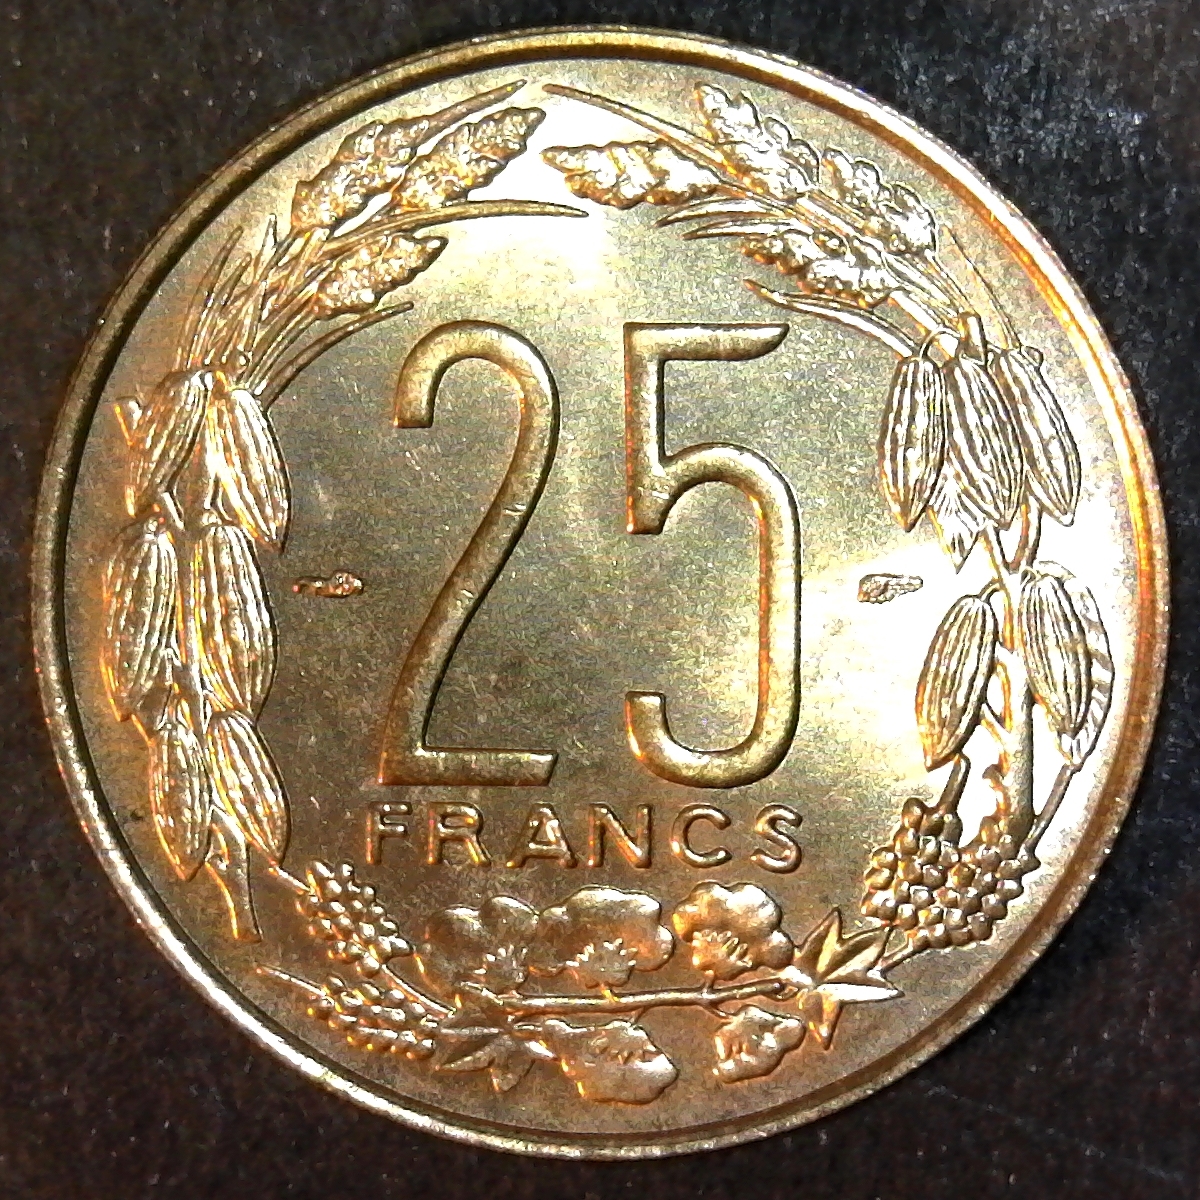 Cameroon 1958 25 Francs reverse.jpg